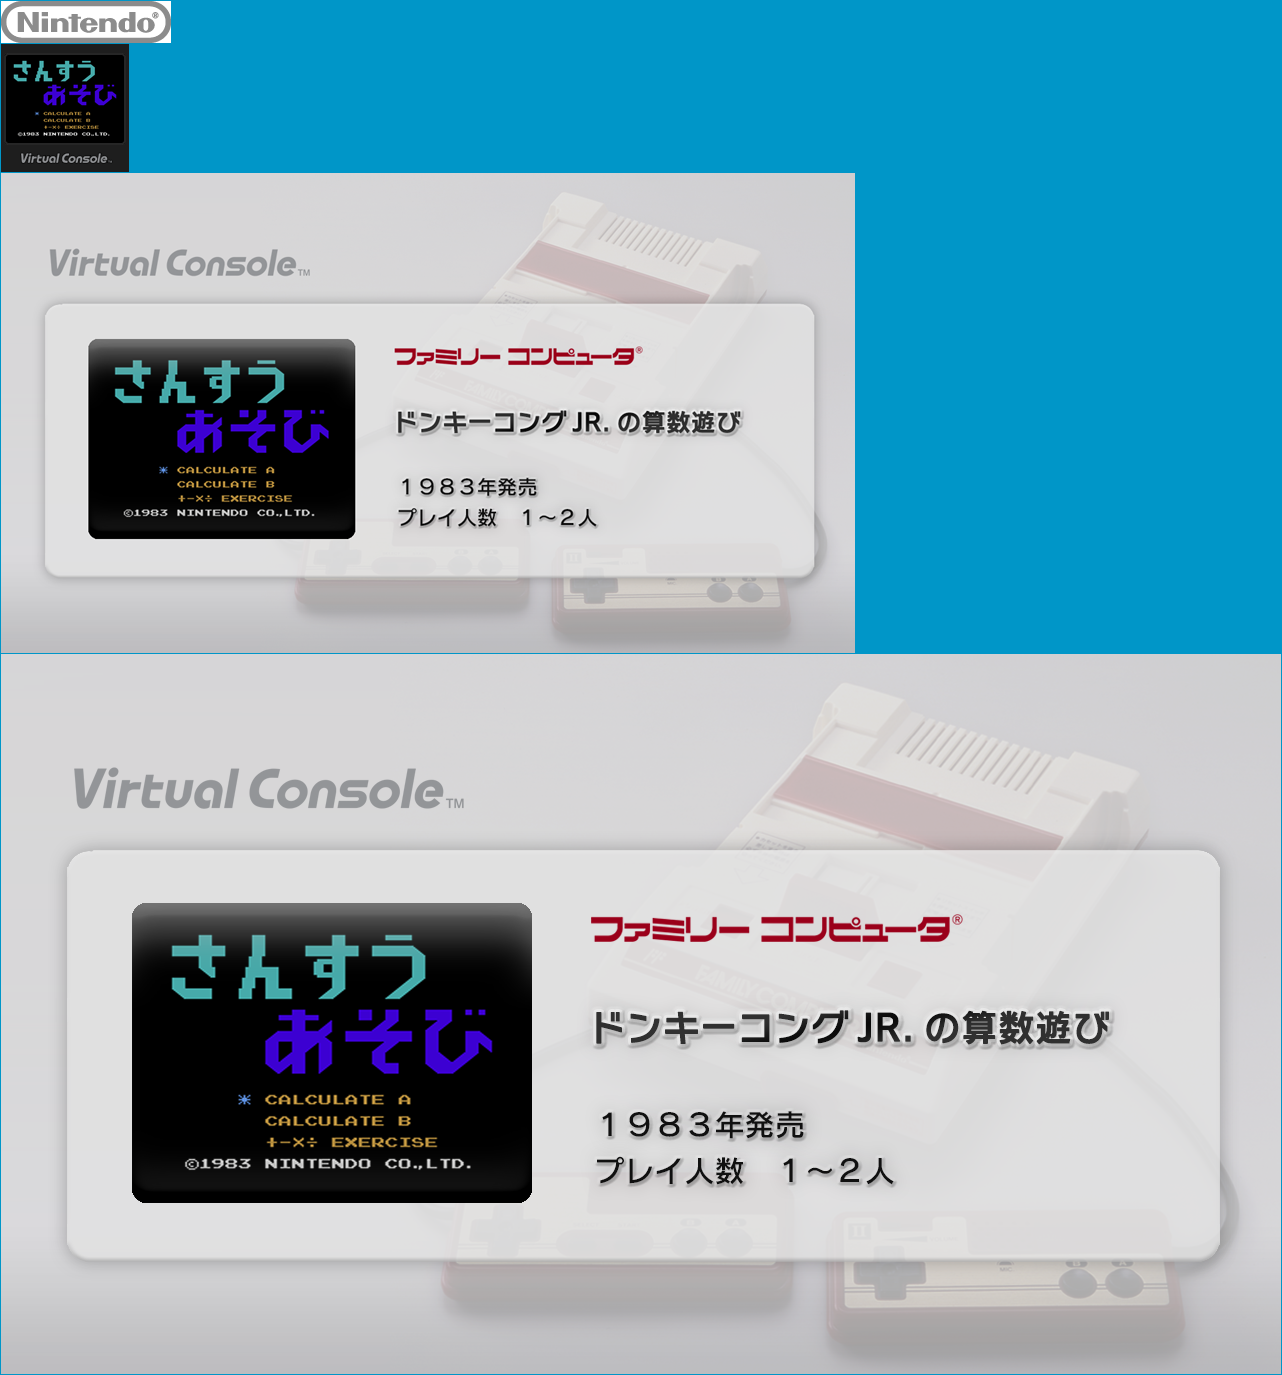 Virtual Console - Donkey Kong Jr. no Sansū Asobi